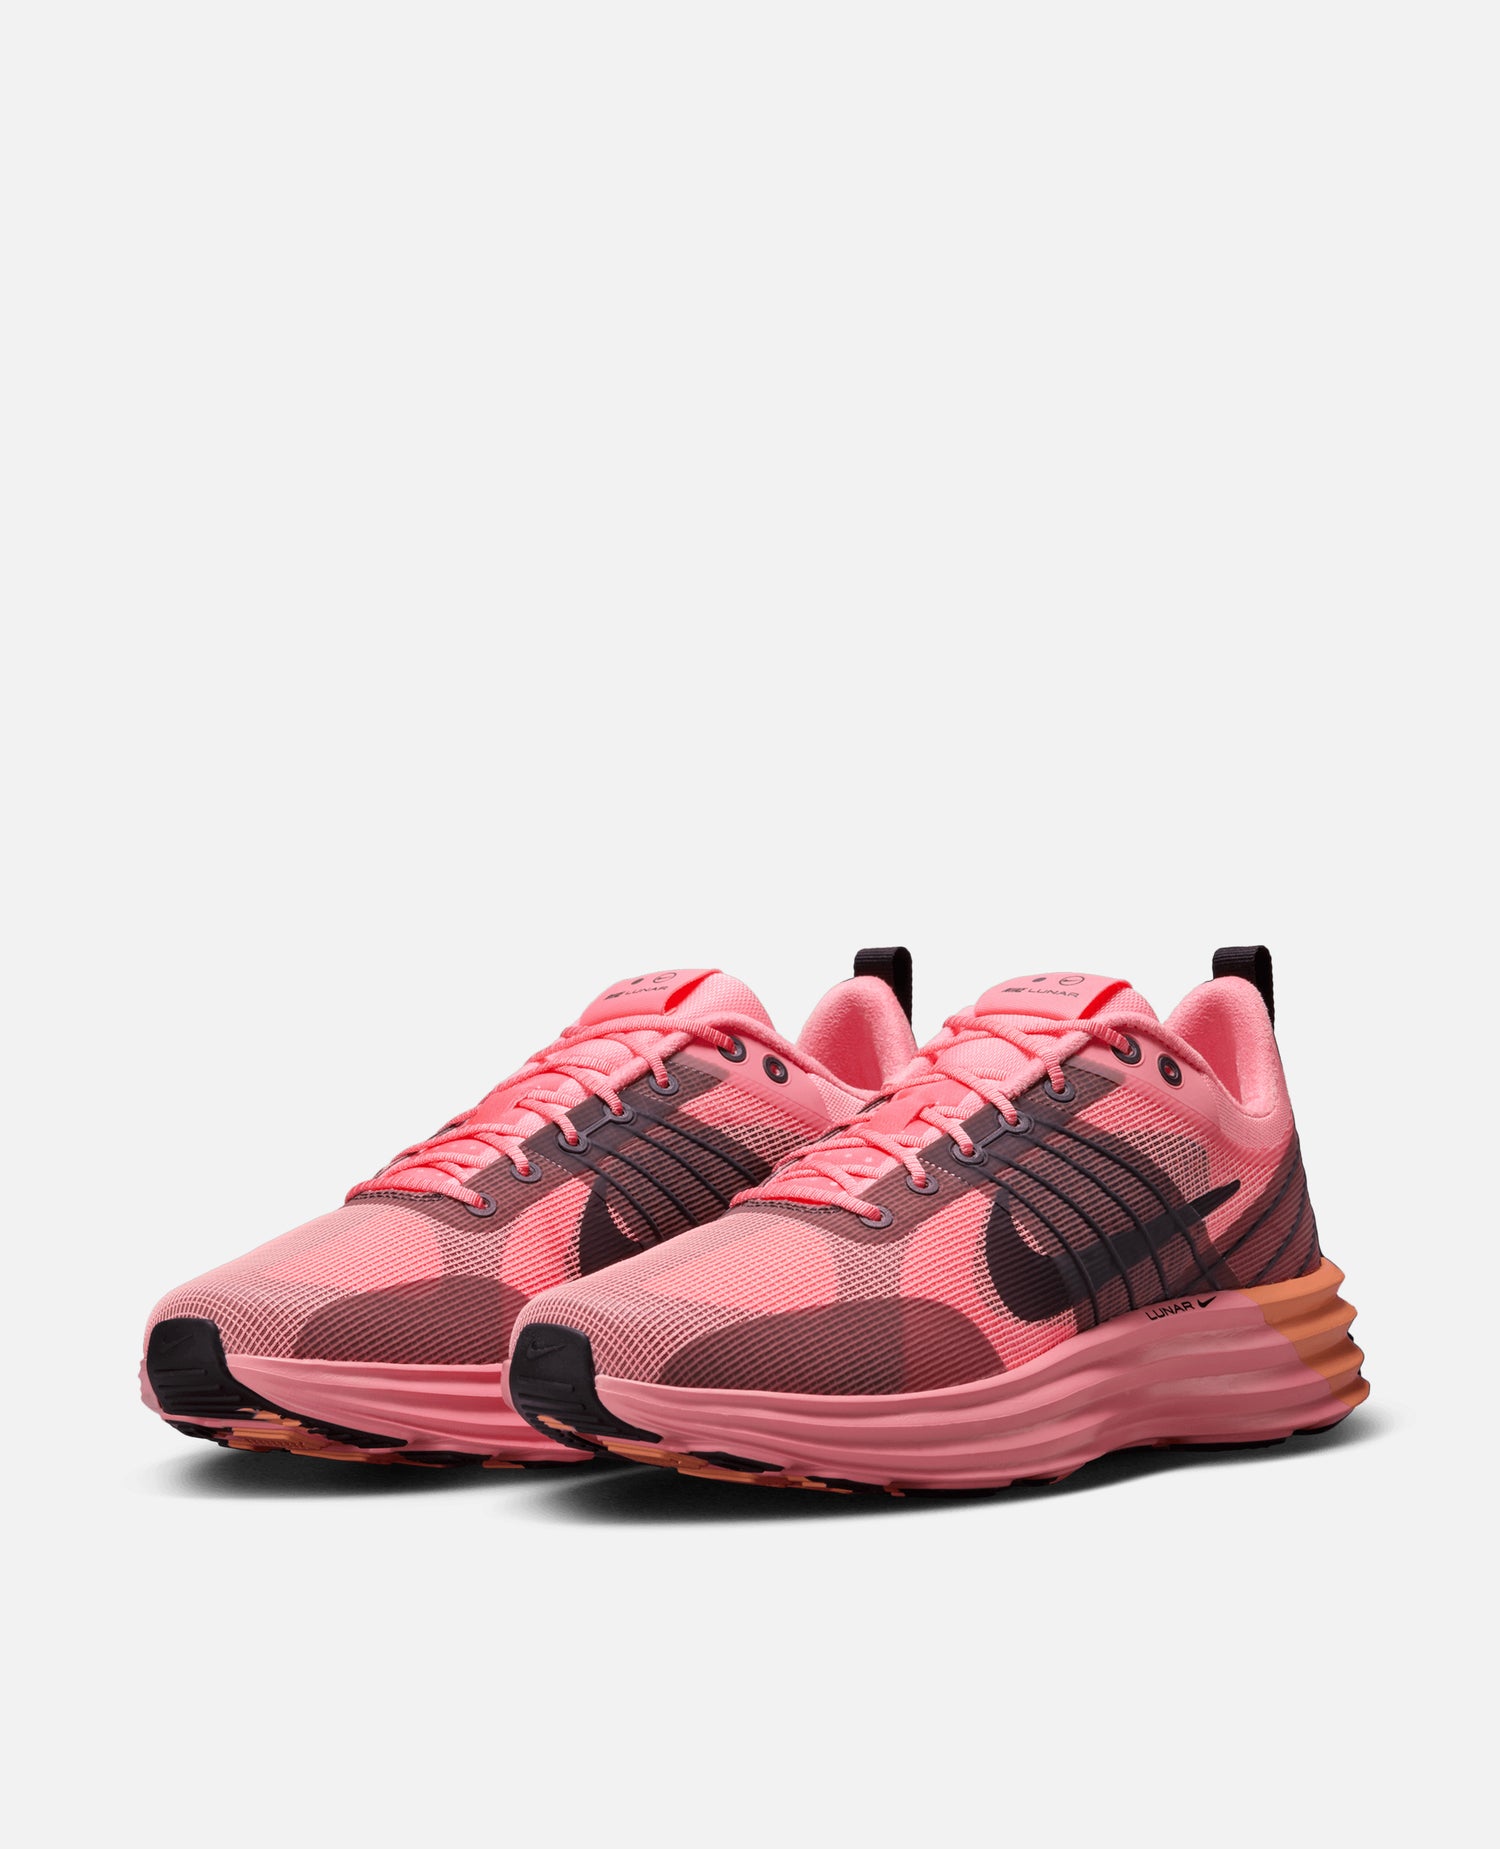 Nike Lunar Roam Premium (Pink Gaze/Black-Crimsom Bliss)